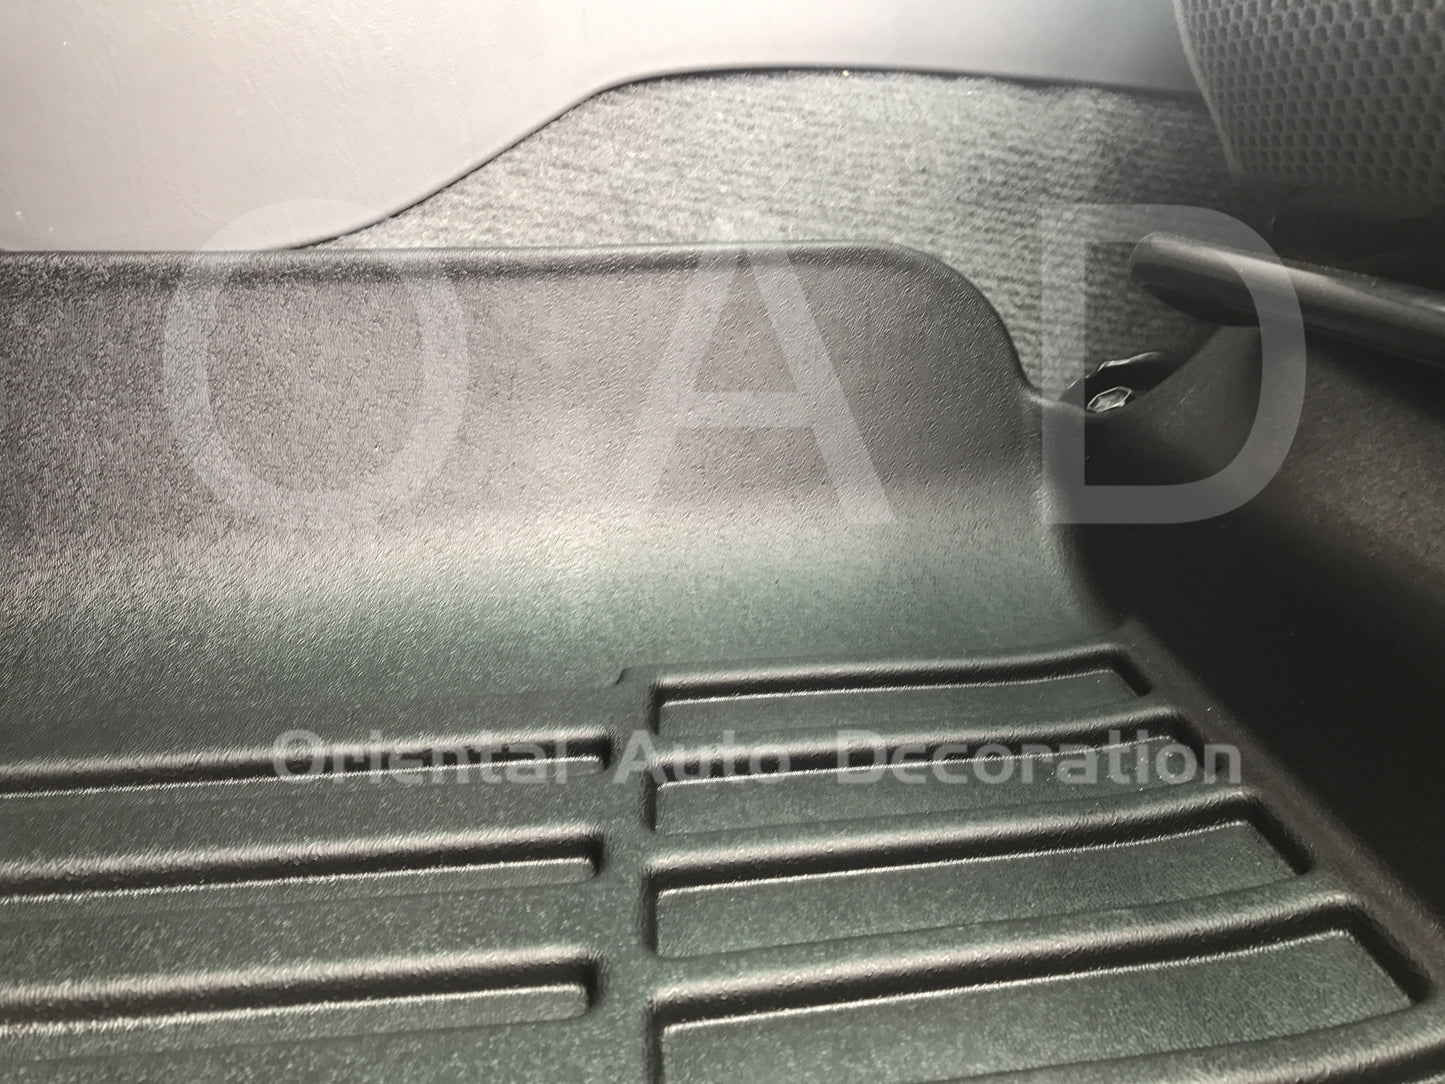 Premium Custom 3D Floor Mats for Nissan Navara NP300 D23 Dual Cab 15+ Without Cup Holder Model Car Mat #T